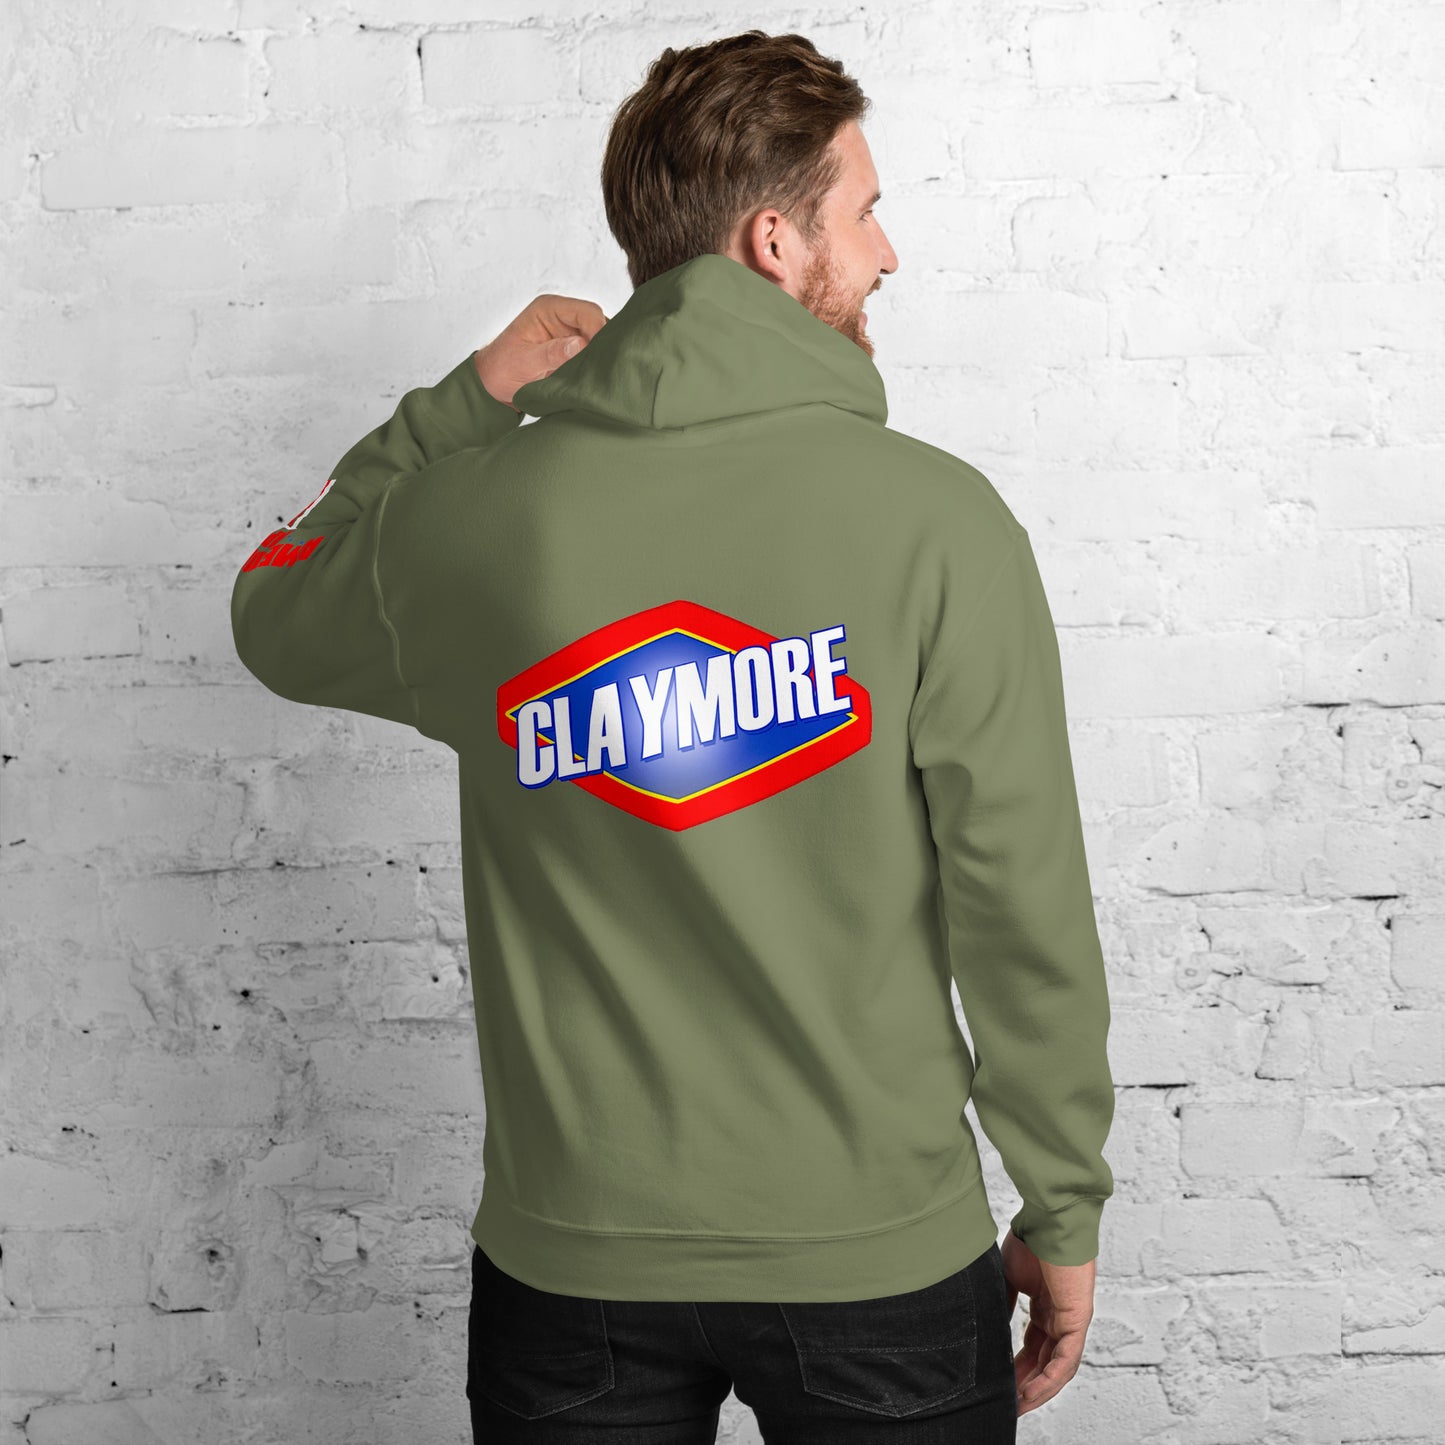 CLAYMORE- Bleachin’ Bodies Unisex Hoodie